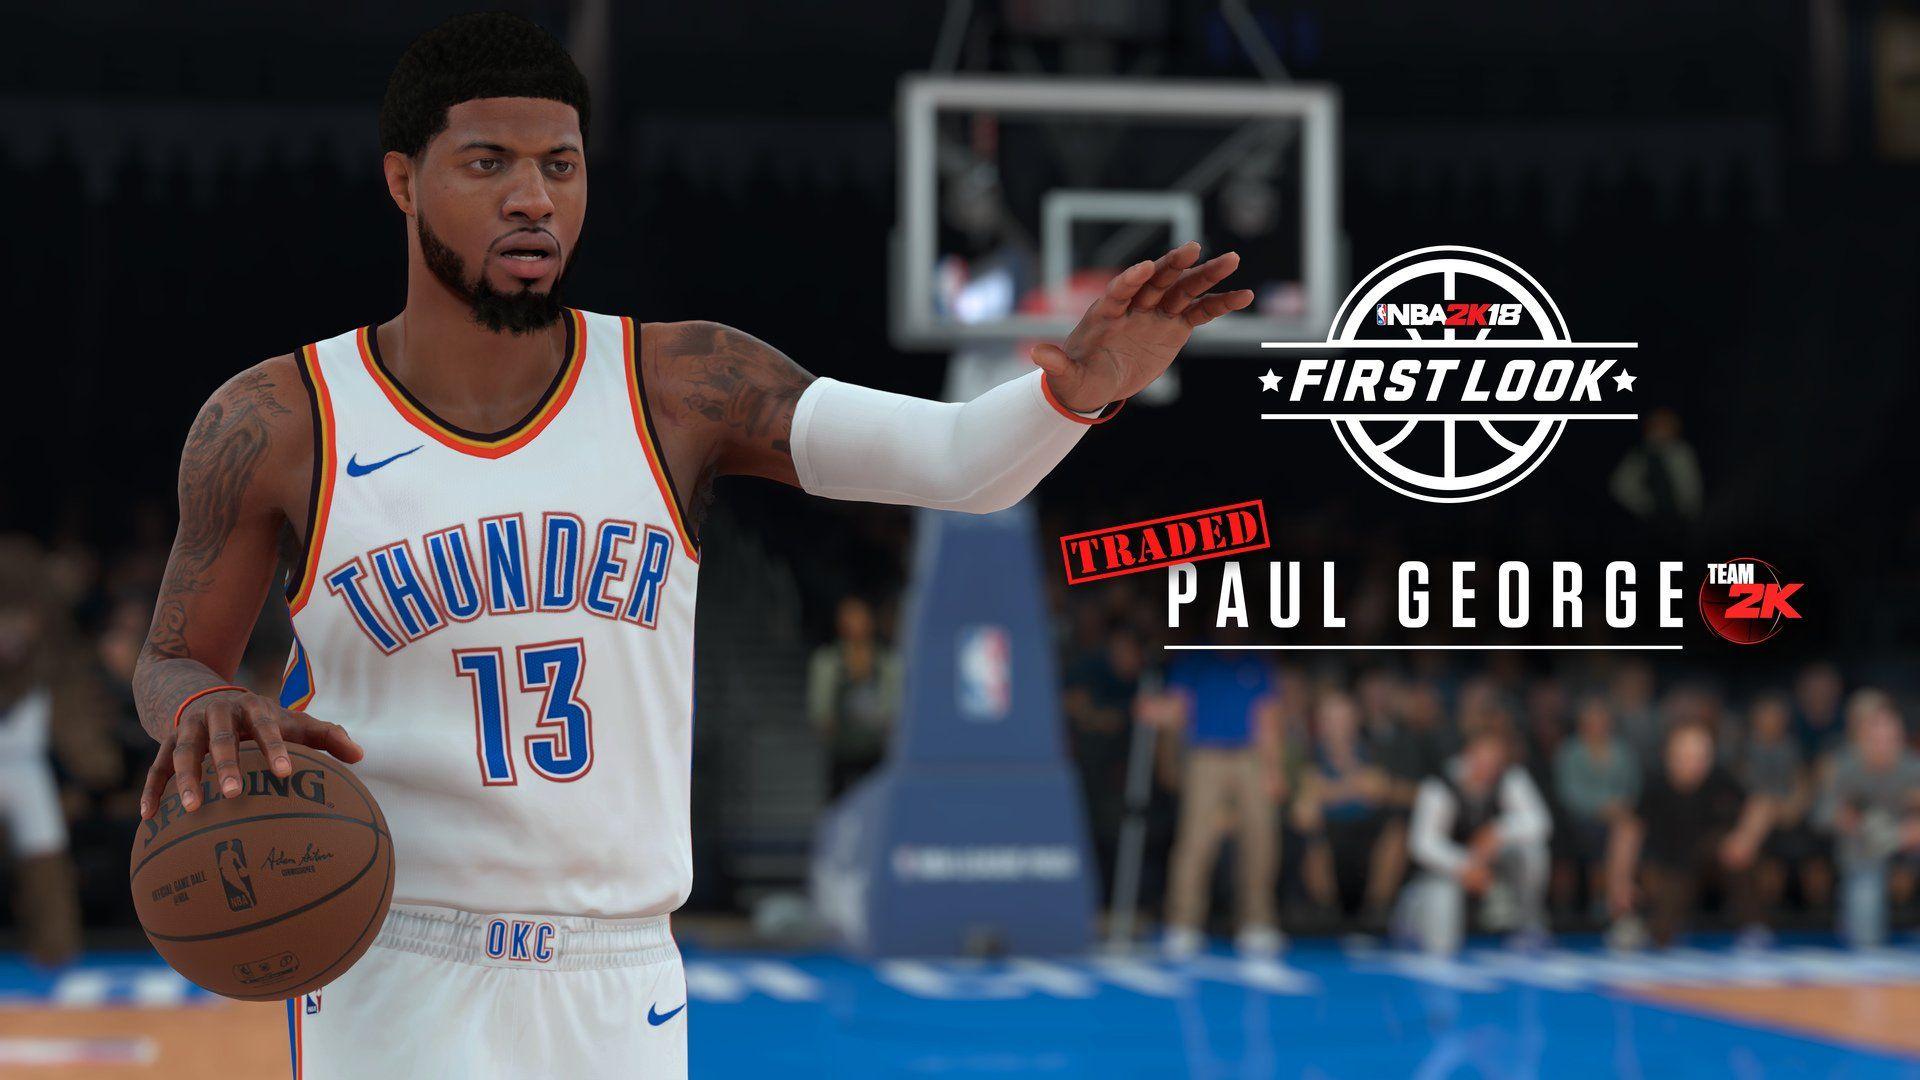 First 'NBA 2K18' screenshots show star players like Paul George